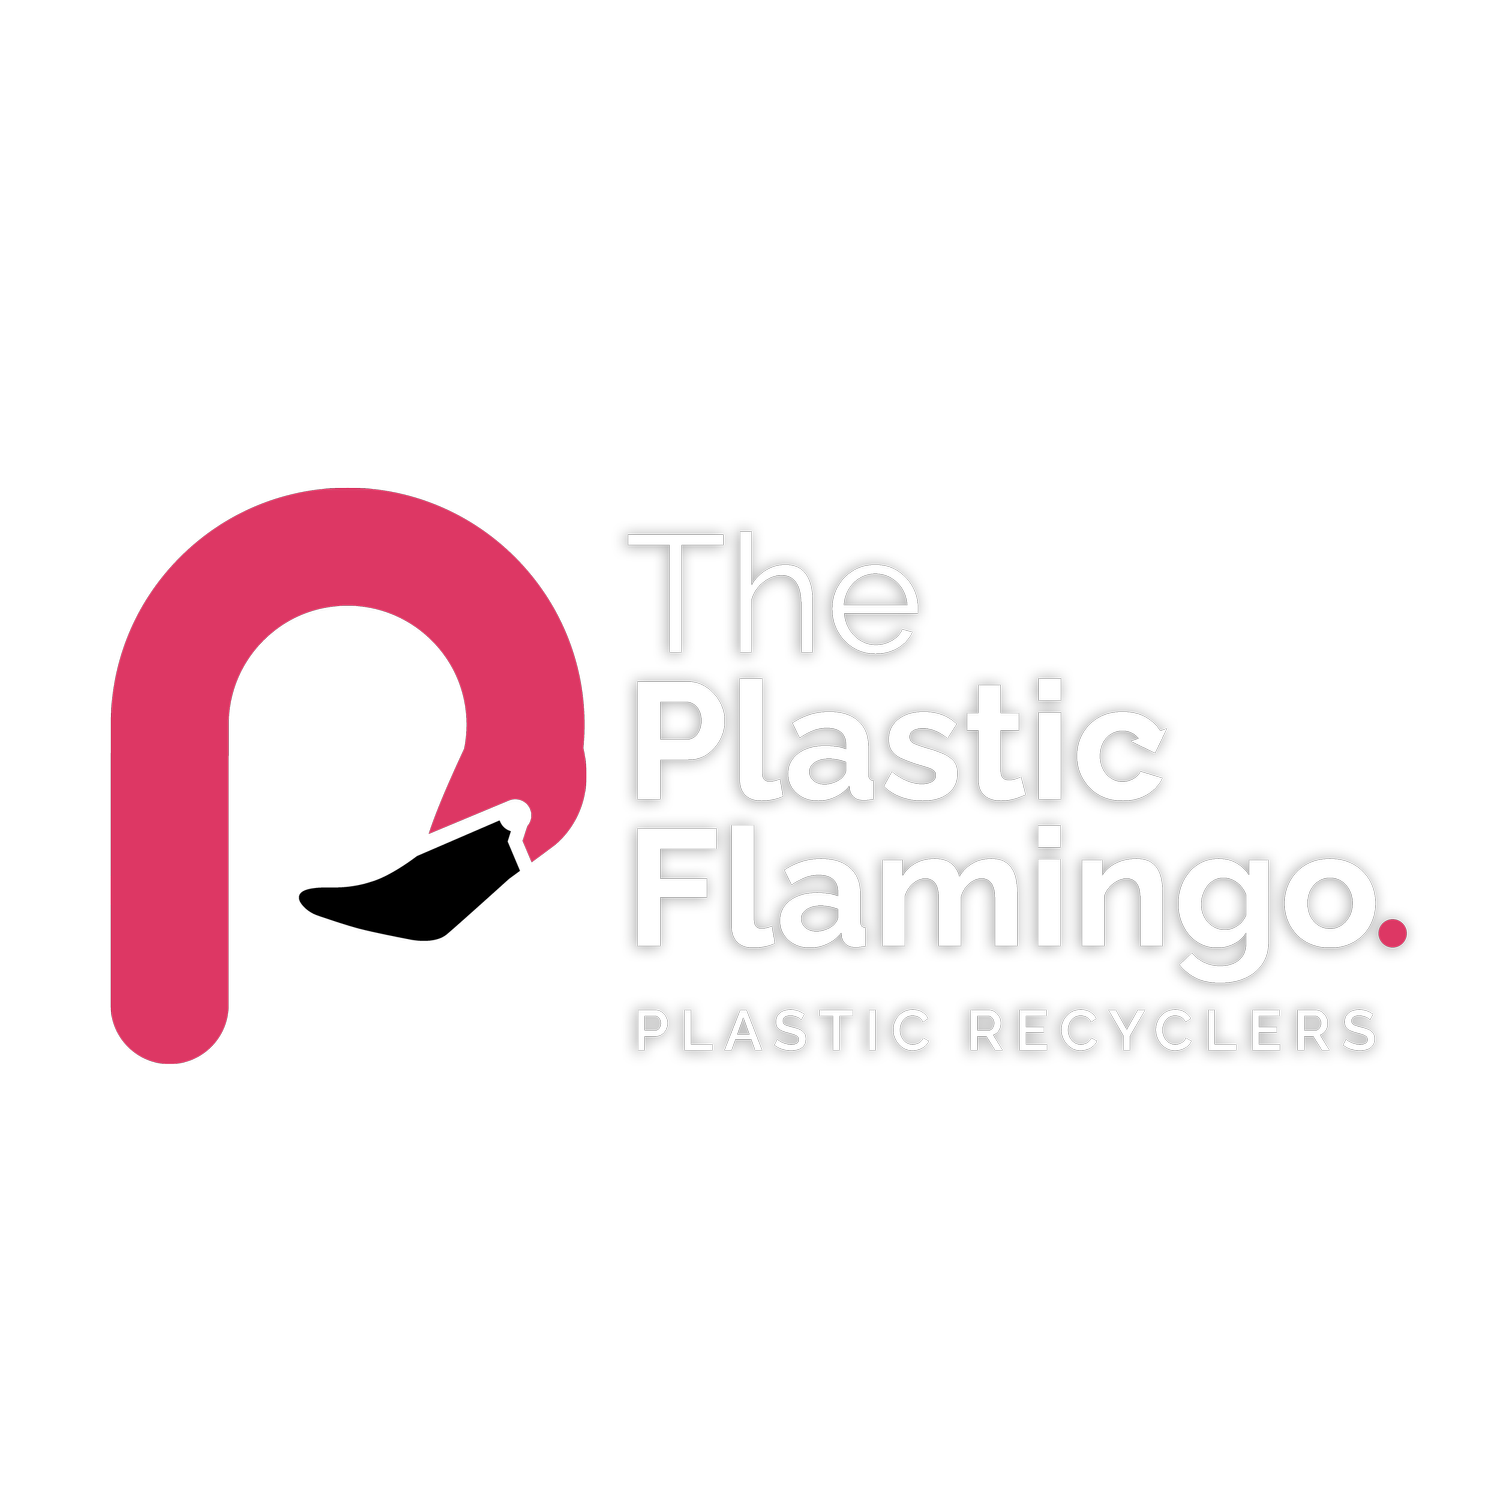 The Plastic Flamingo